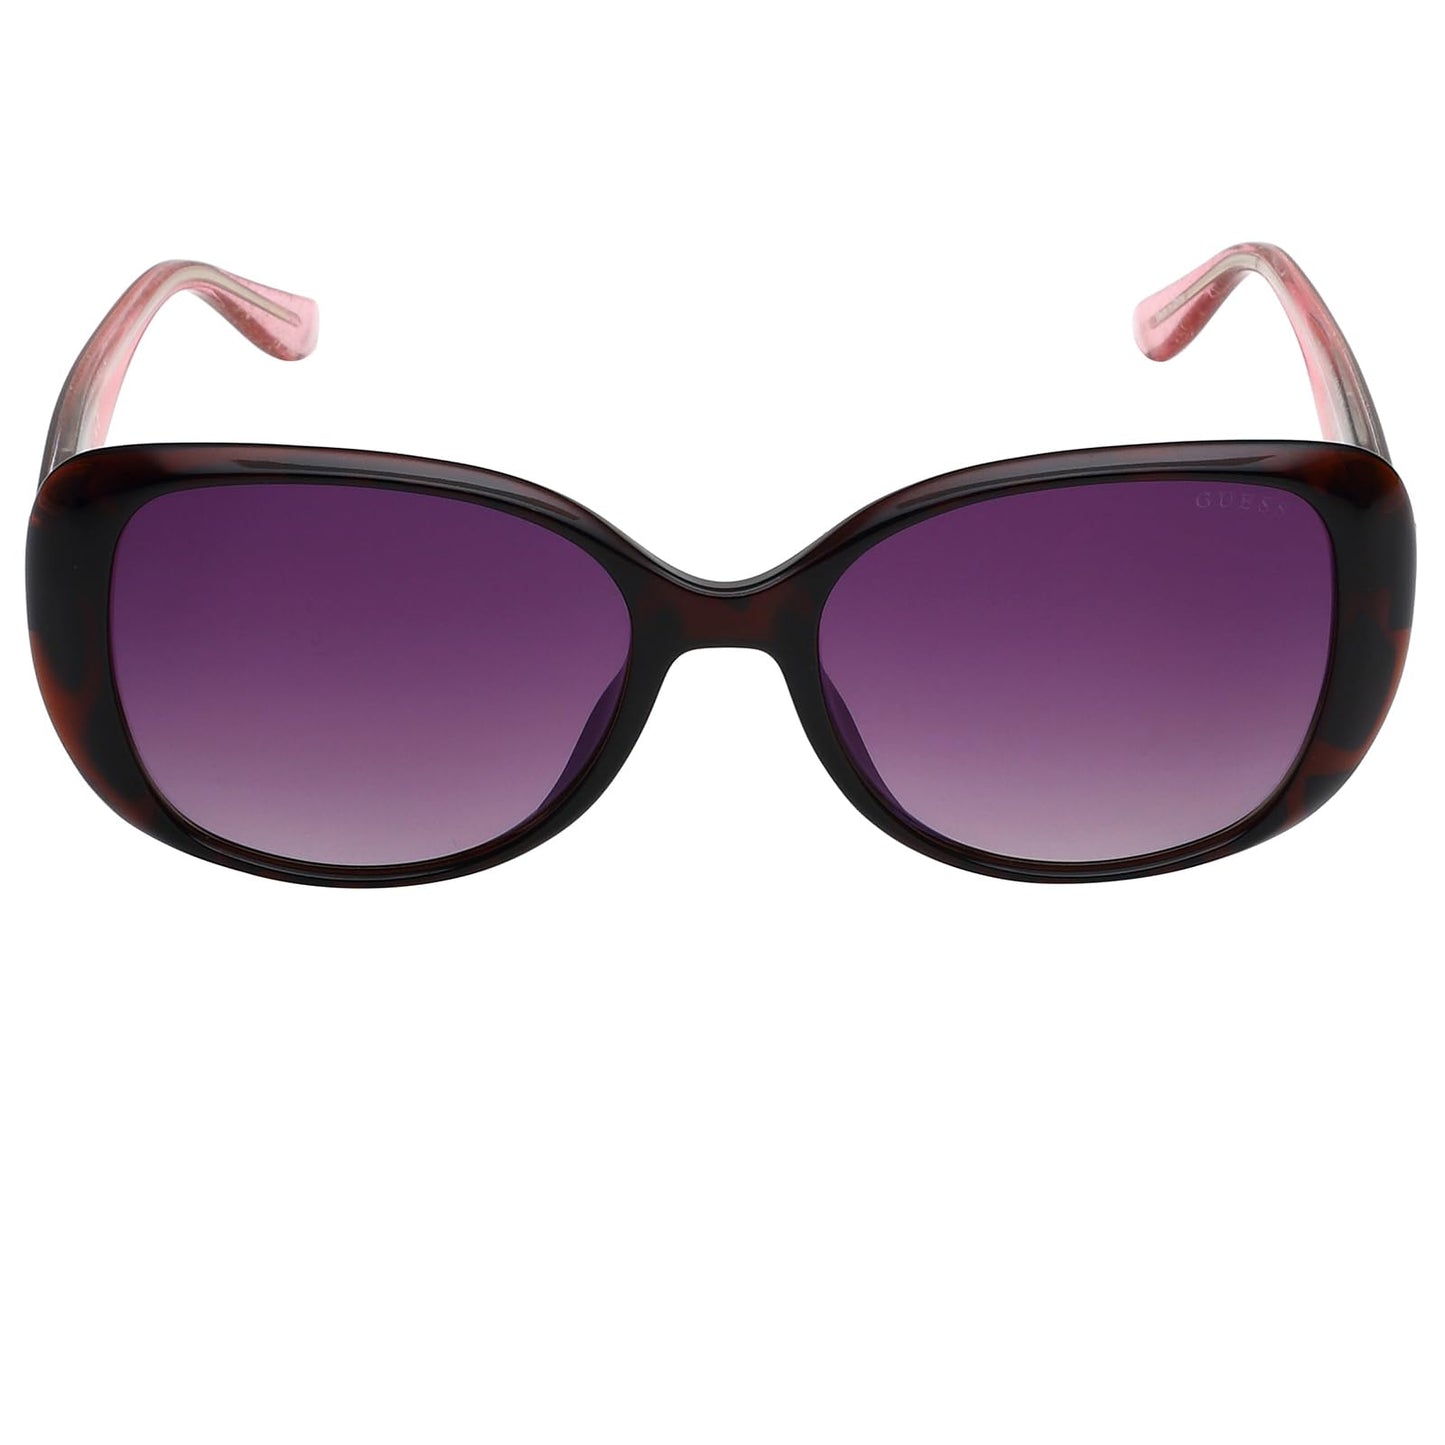 GUESS None Square Women's Sunglasses WOMEN S7554 52F 54 SUNGLASSES|54|BROWN GRADED Color Lens